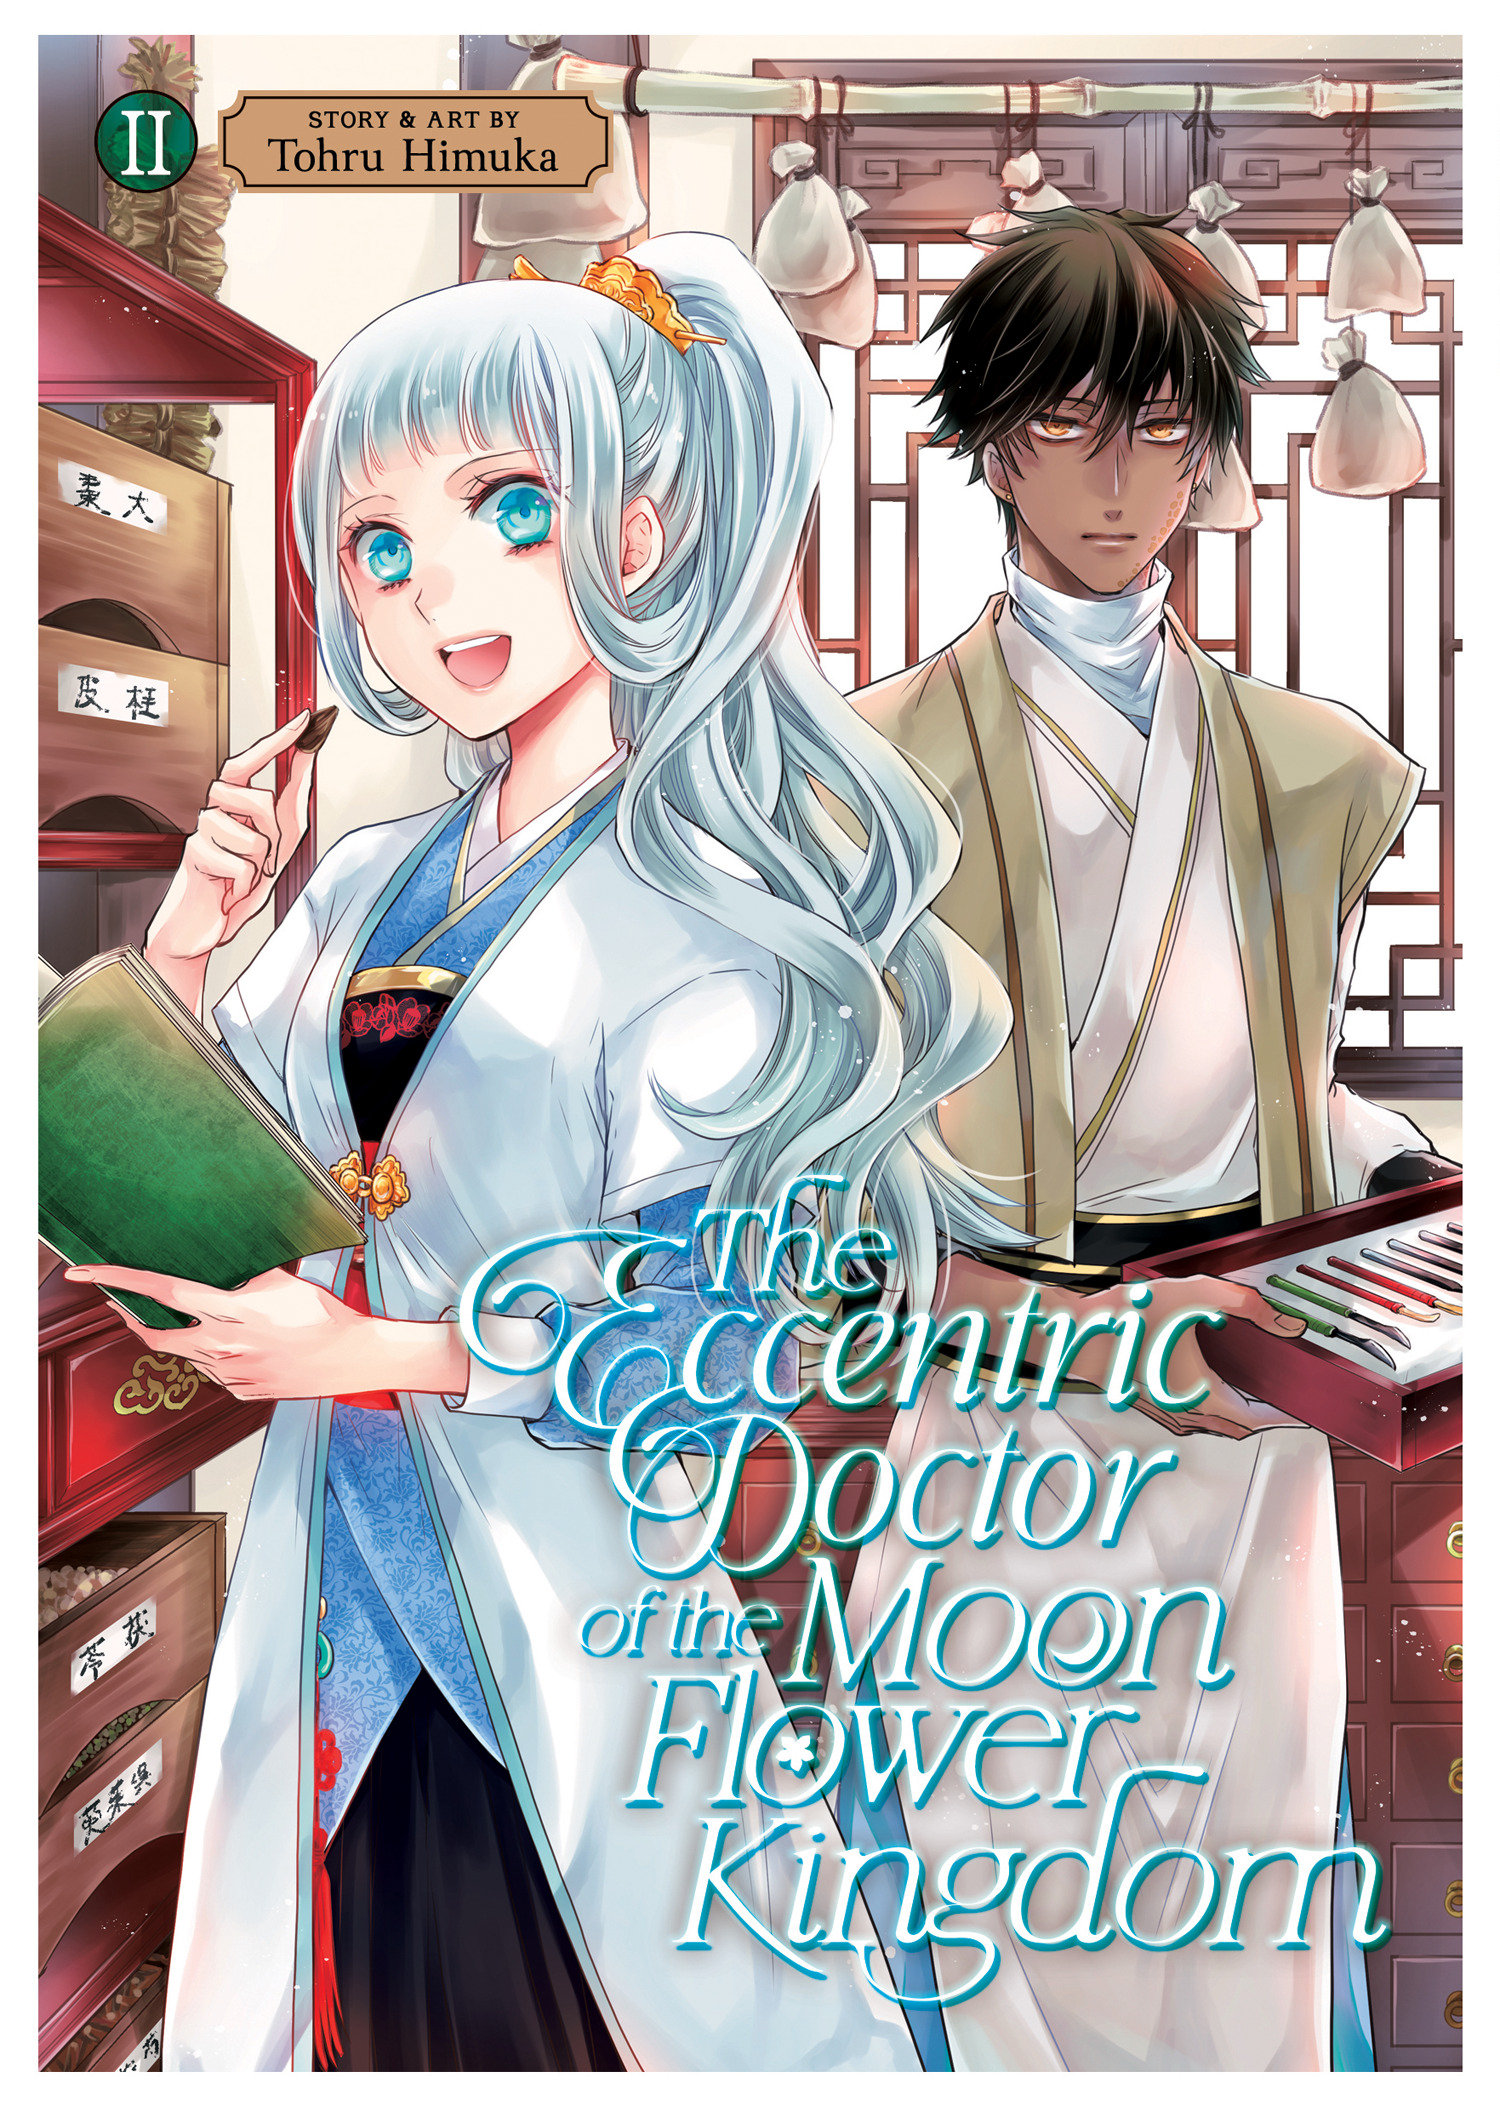 Eccentric Doctor of the Moon Flower Kingdom Manga Volume 2